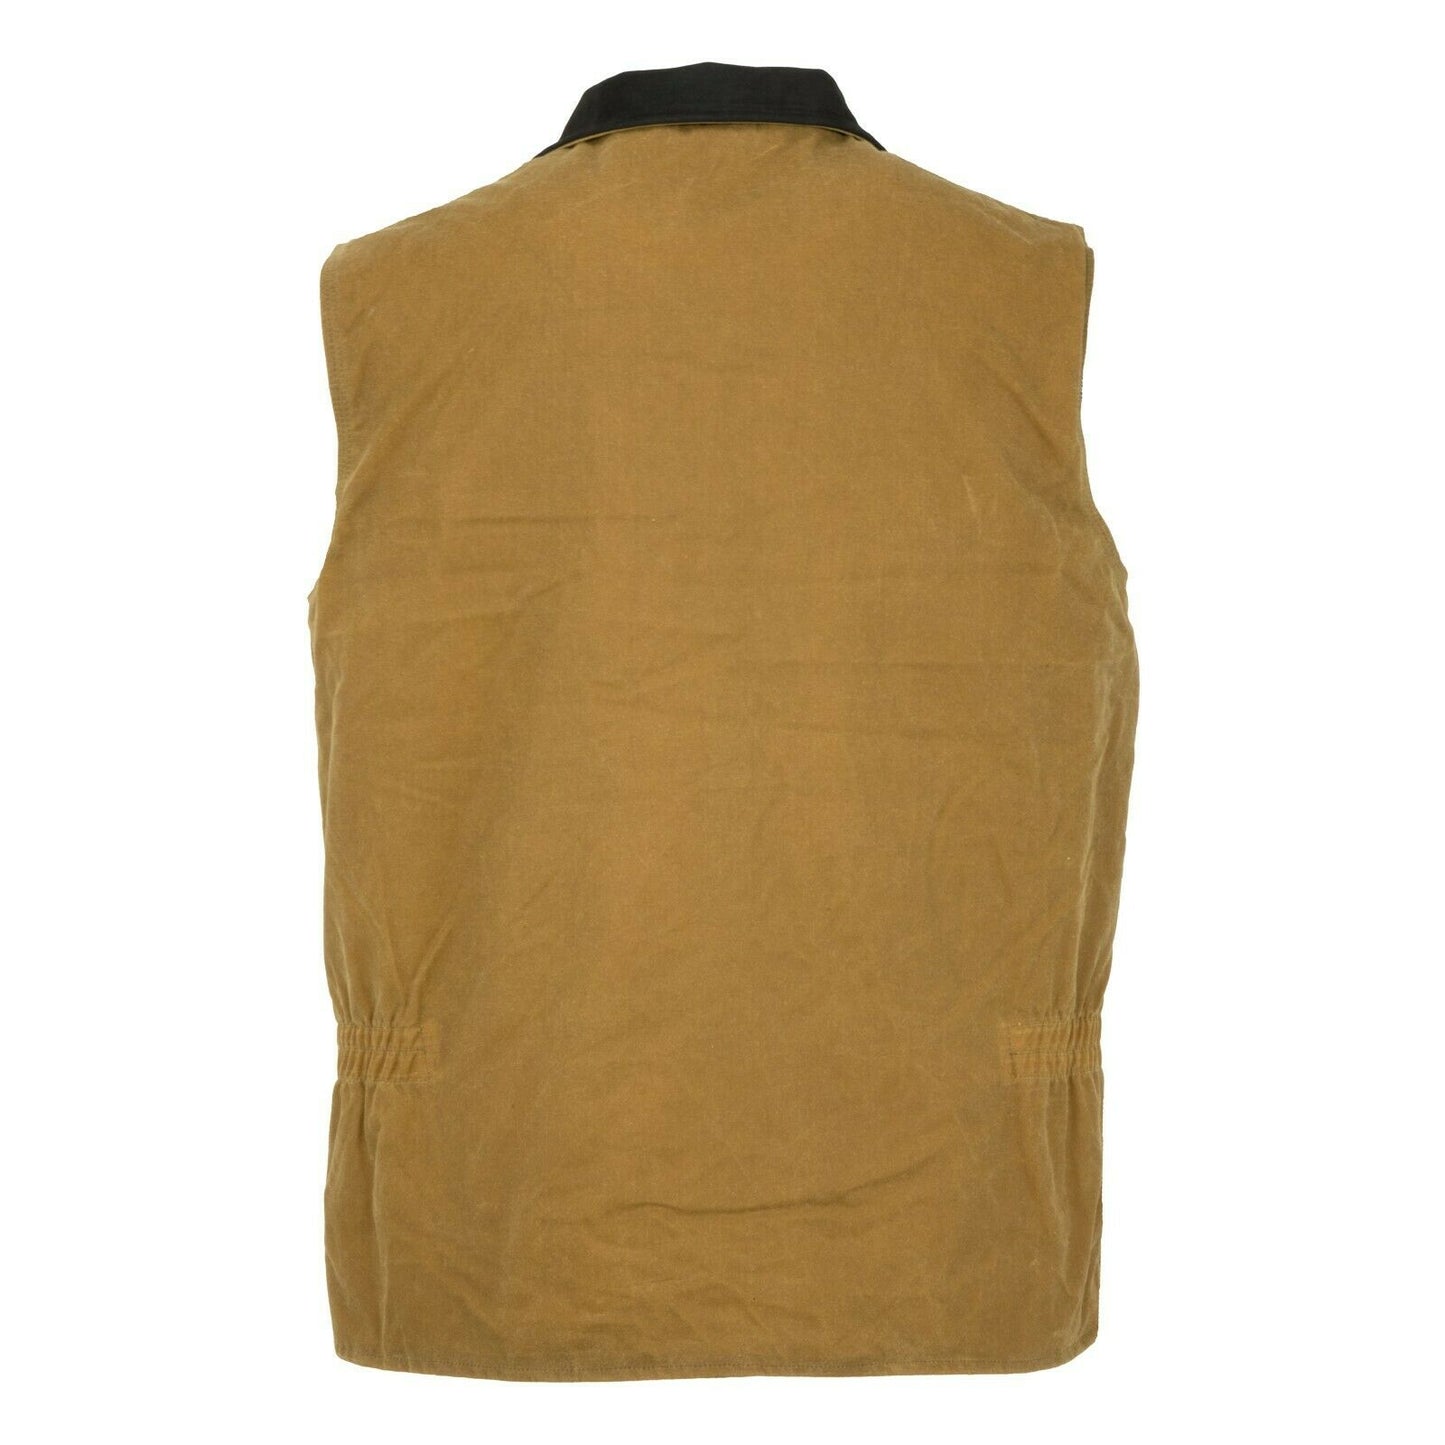 Outback Trading Company® Men's Sawbuck Field Tan Oilskin Vest 2143-FTN